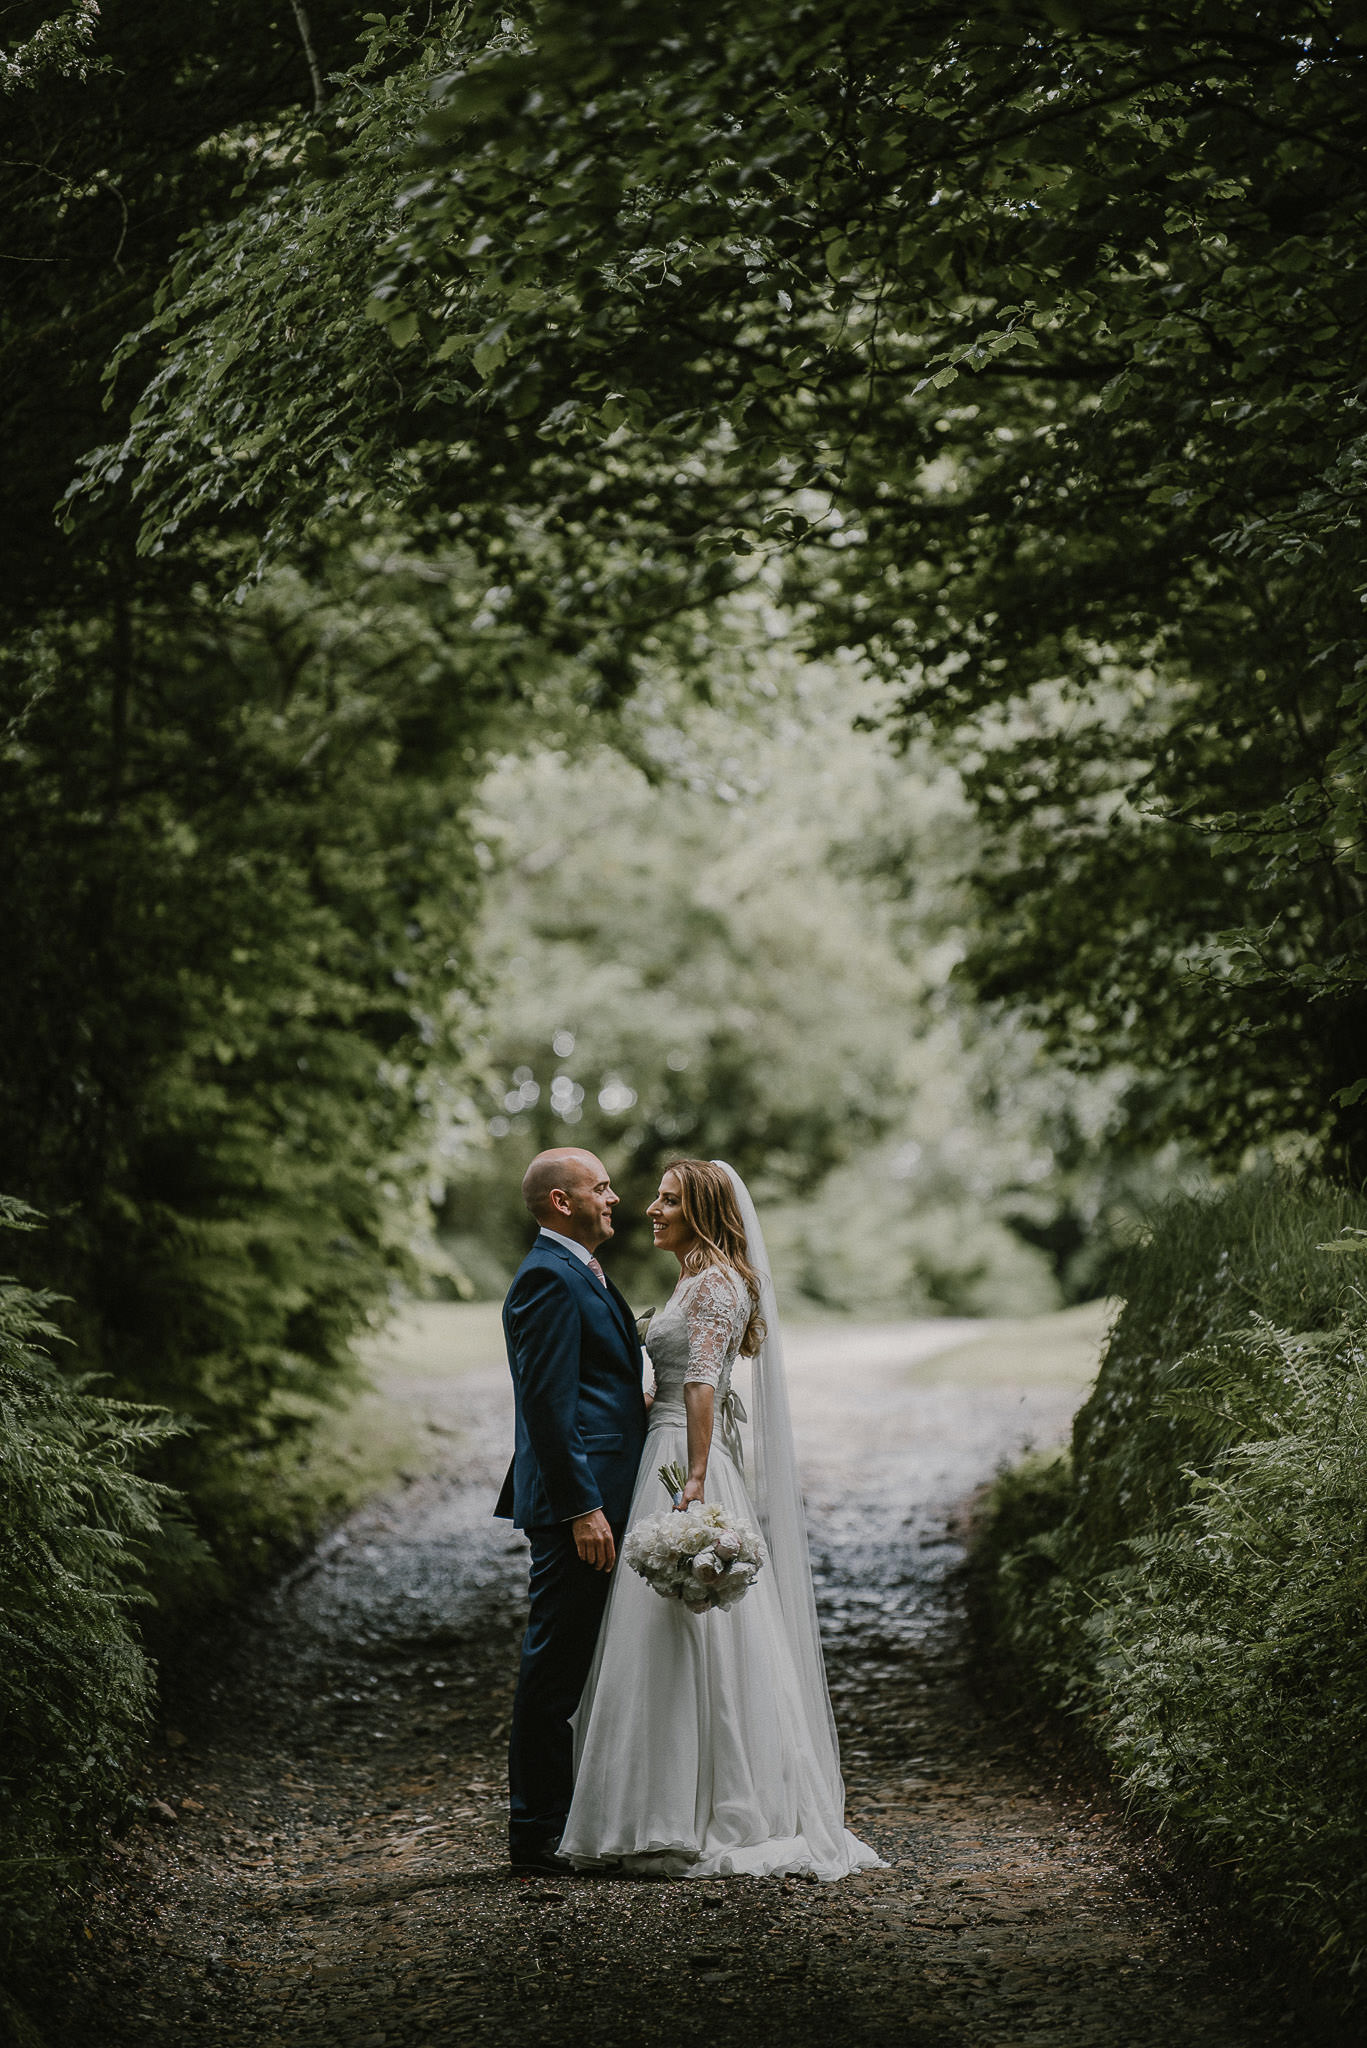 BEST-WEDDING-PHOTOGRAPHER-CORNWALL-2018-96.jpg